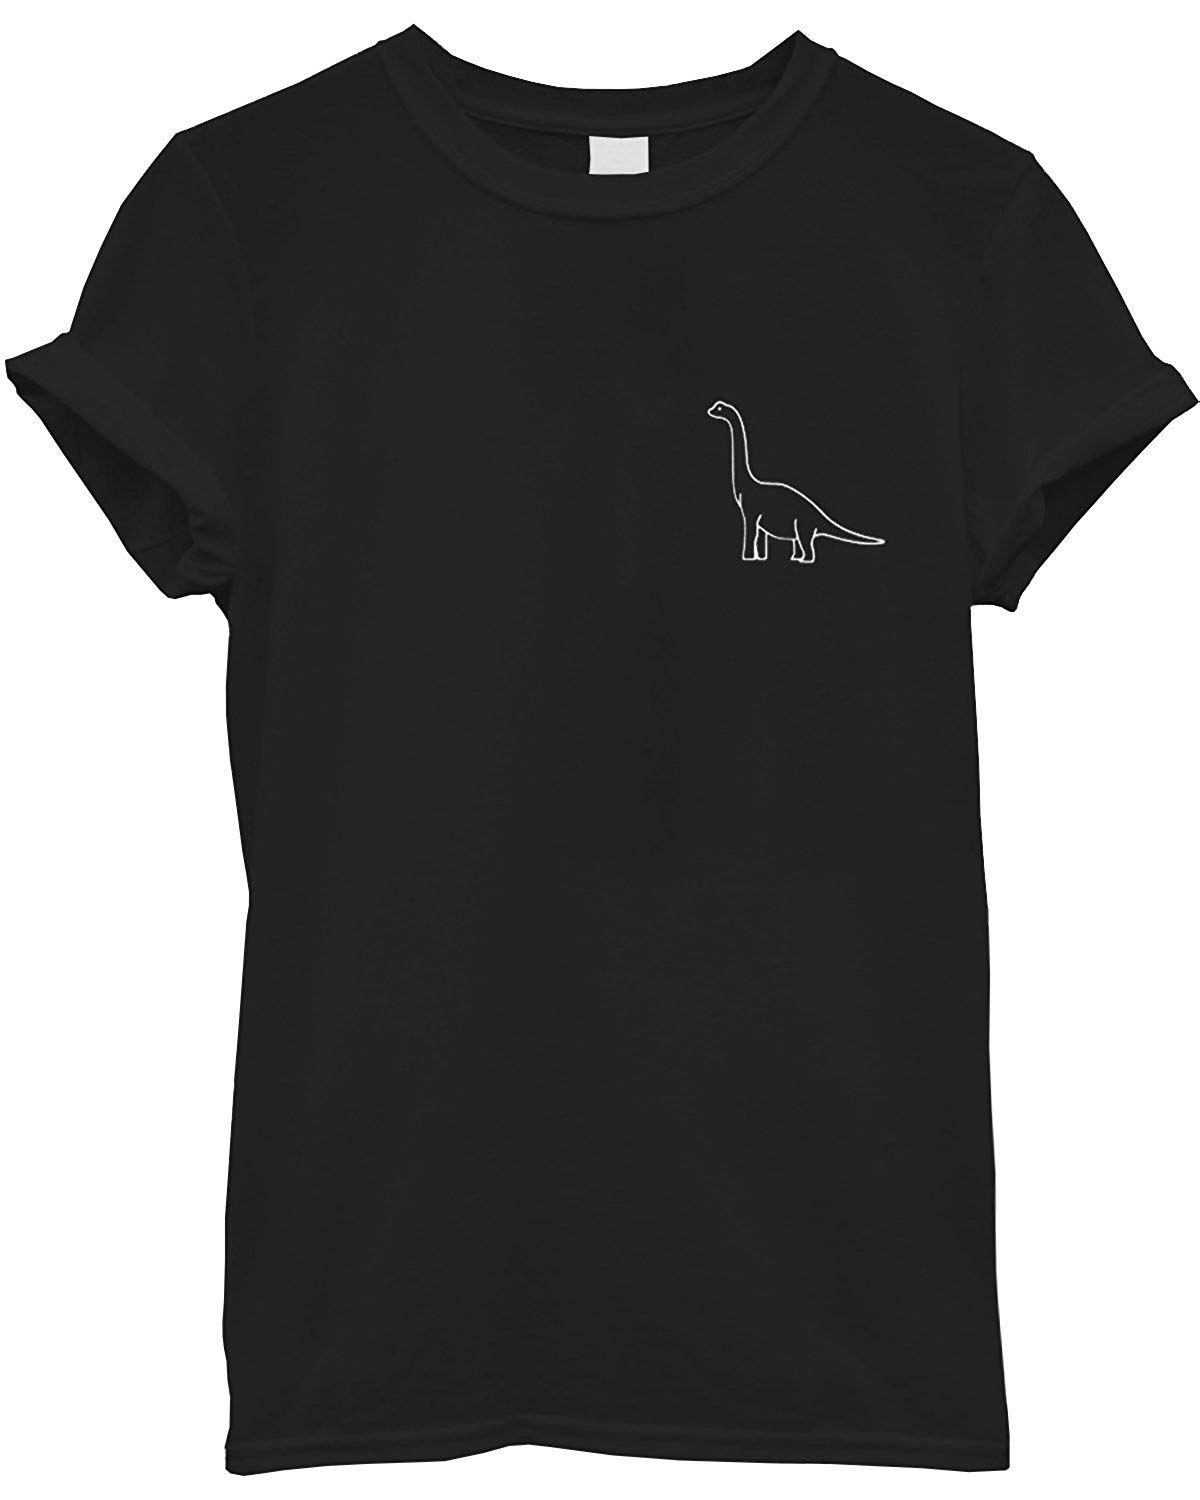 Black Dinosaur Logo - Dinosaur Pocket Black T Shirt S M L XL 2XL Mens Womens Blogger